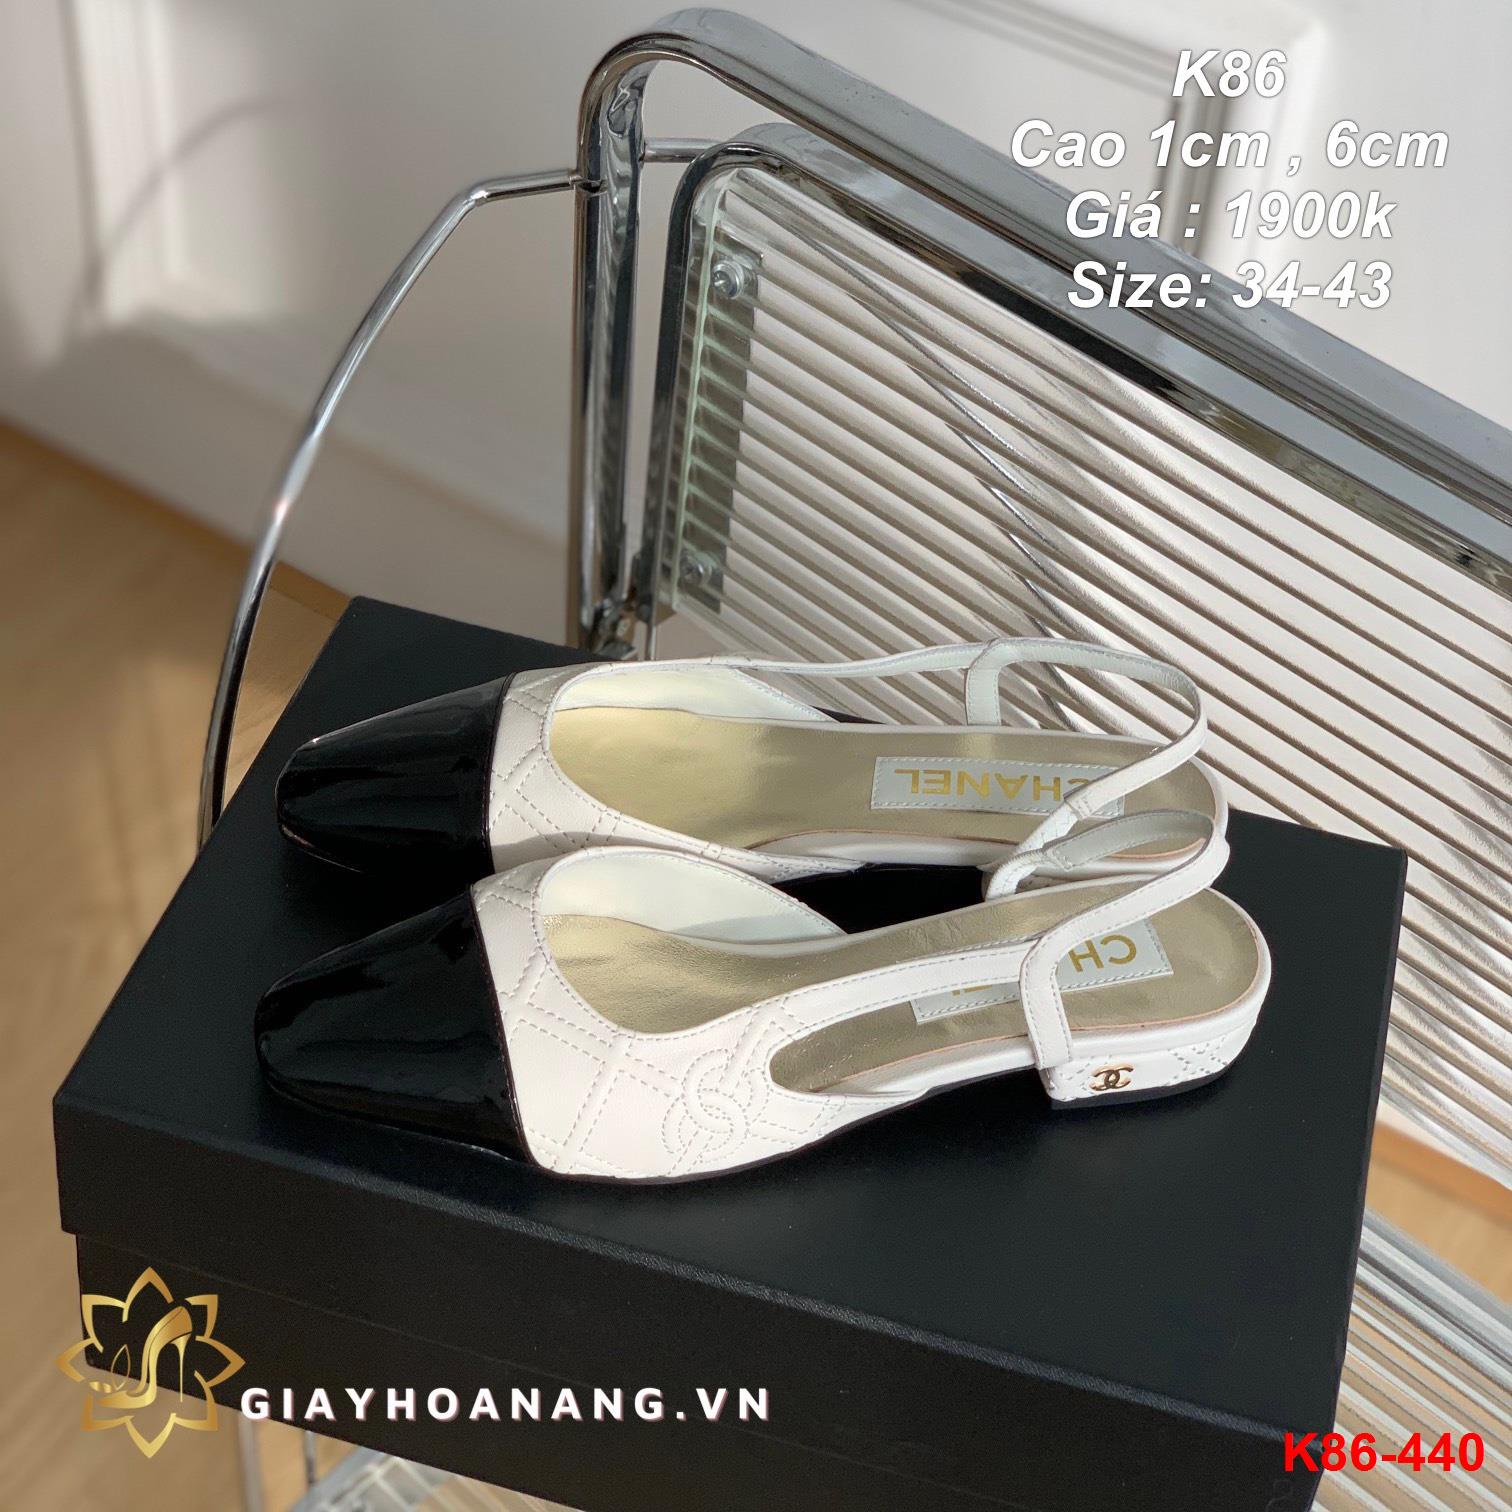 K86-440 Chanel sandal cao 1cm , 6cm siêu cấp